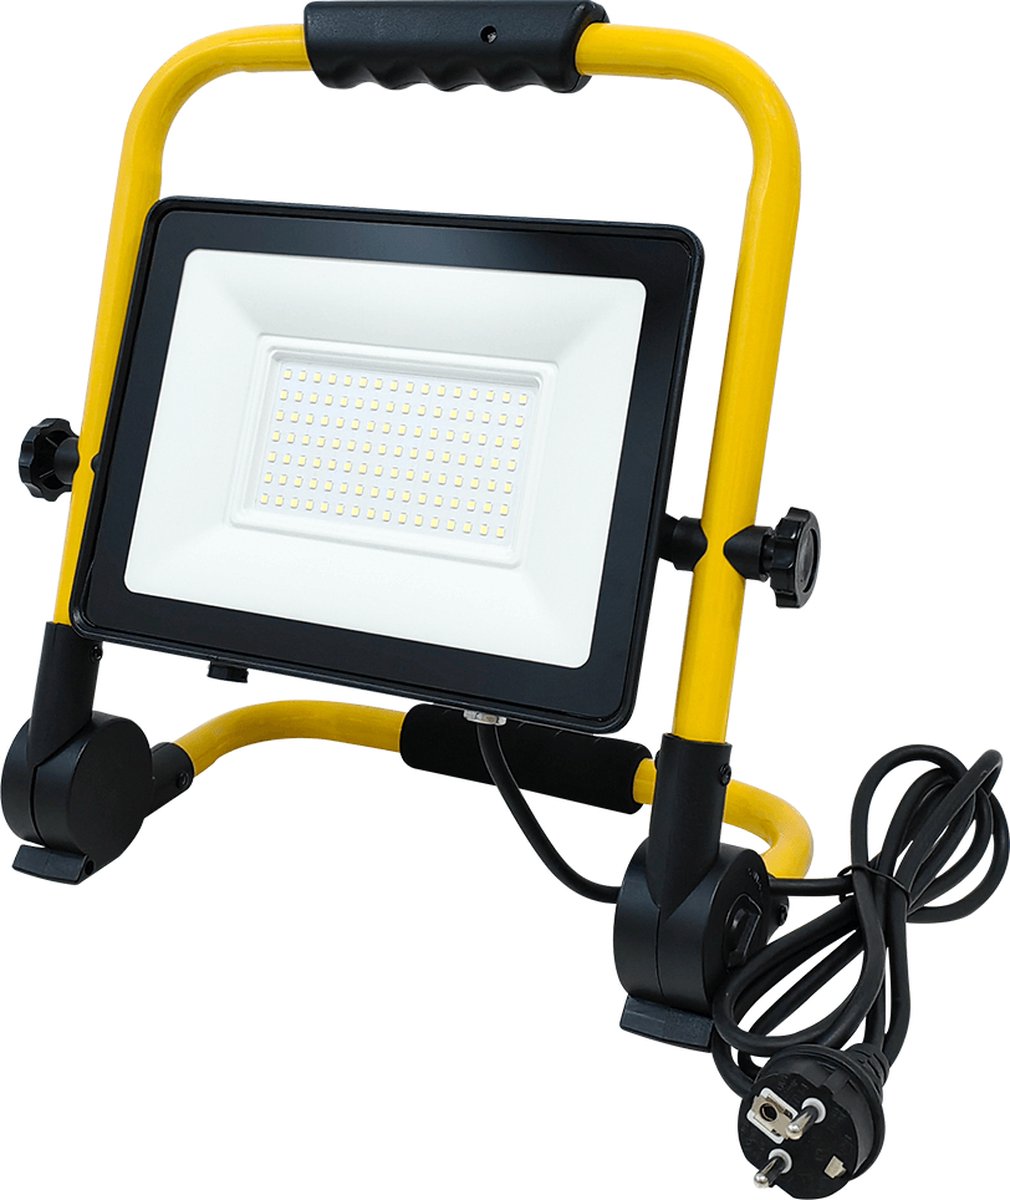 LED bouwlamp op standaard - Waterdicht - Met stekker – 100 Watt